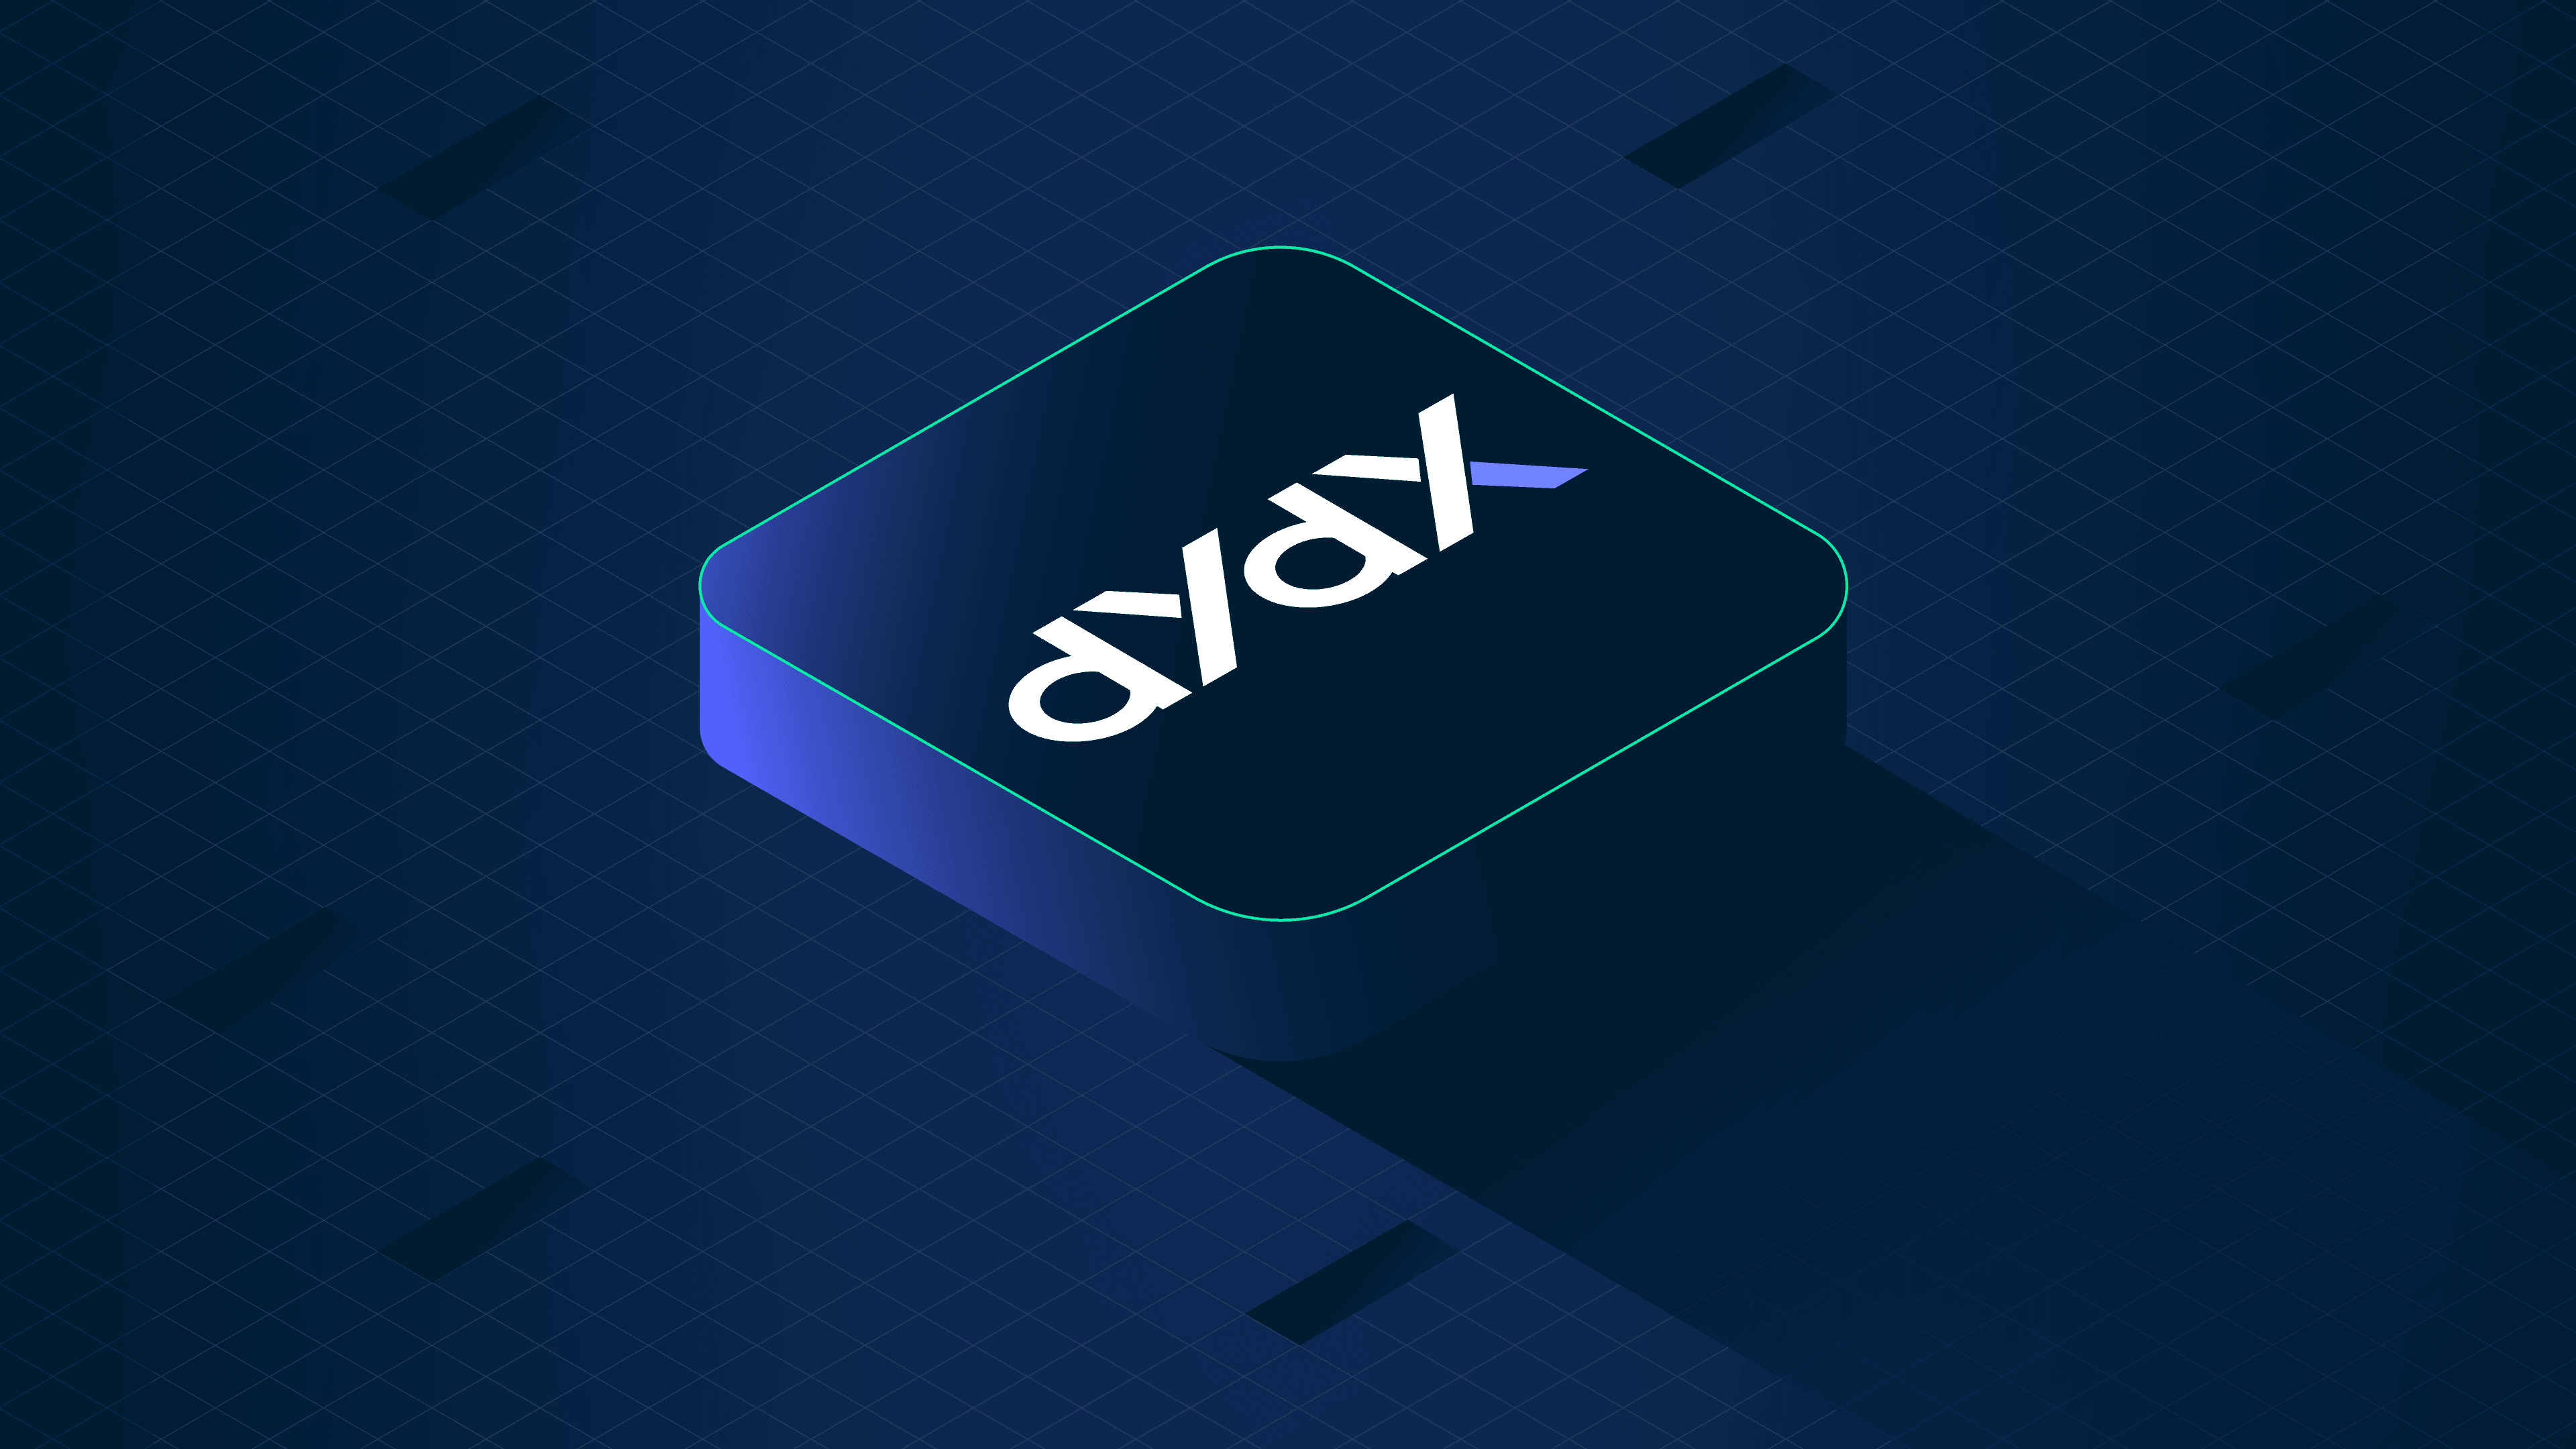 DYDX – First Mover Advantage